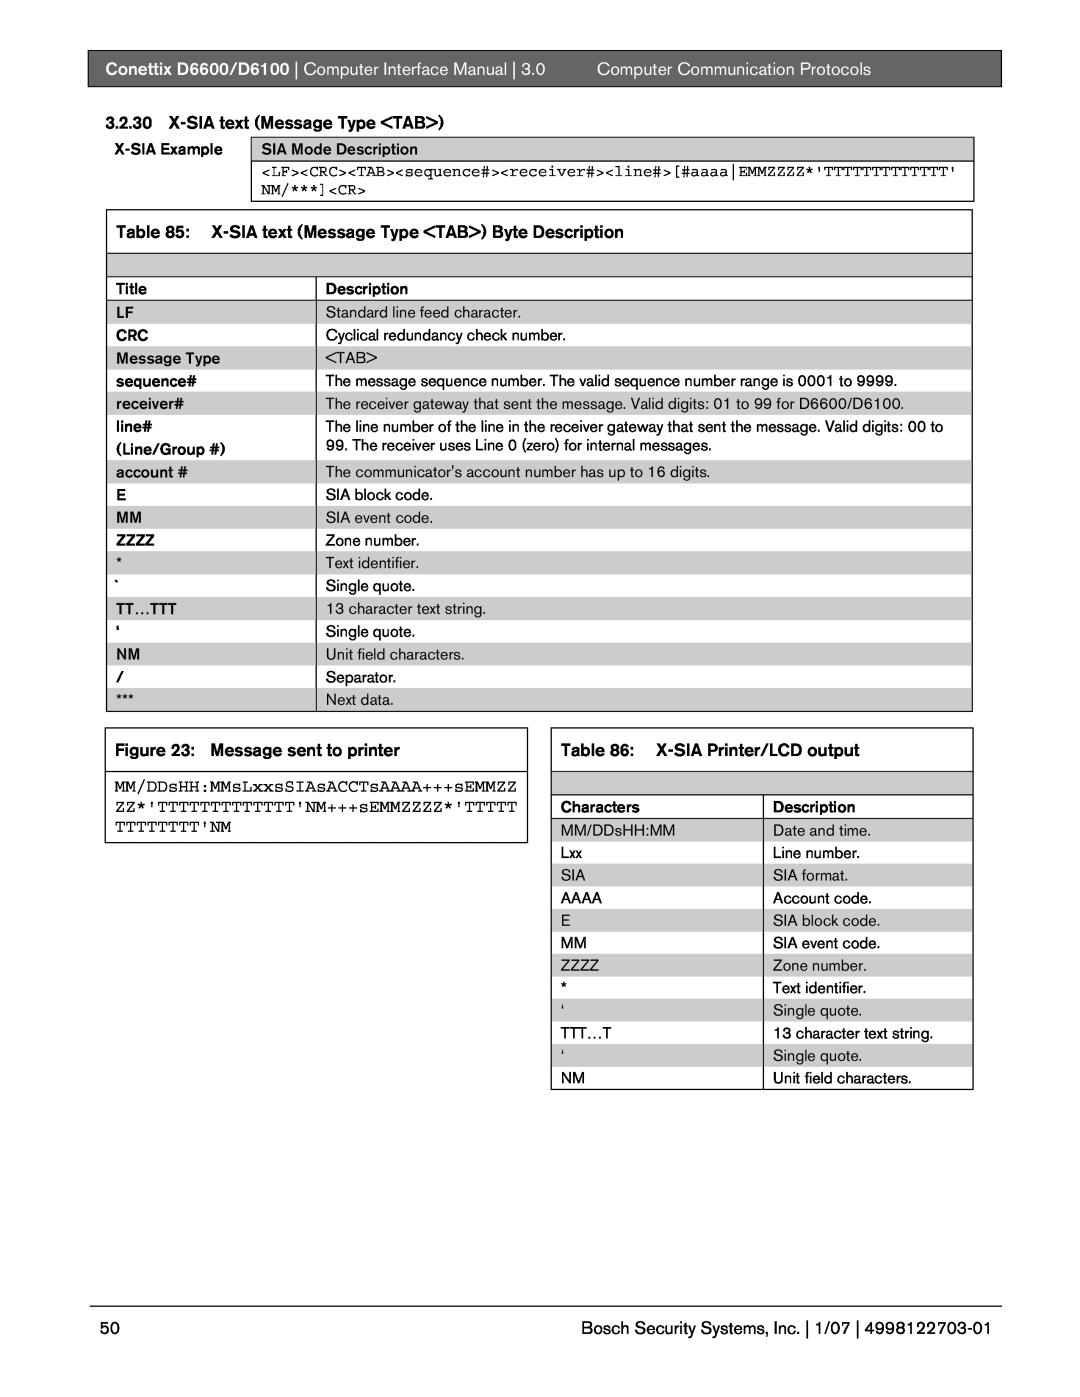 Bosch Appliances D6600 manual X-SIAtext Message Type <TAB>, Message sent to printer, MM/DDsHH MMsLxxsSIAsACCTsAAAA+++sEMMZZ 